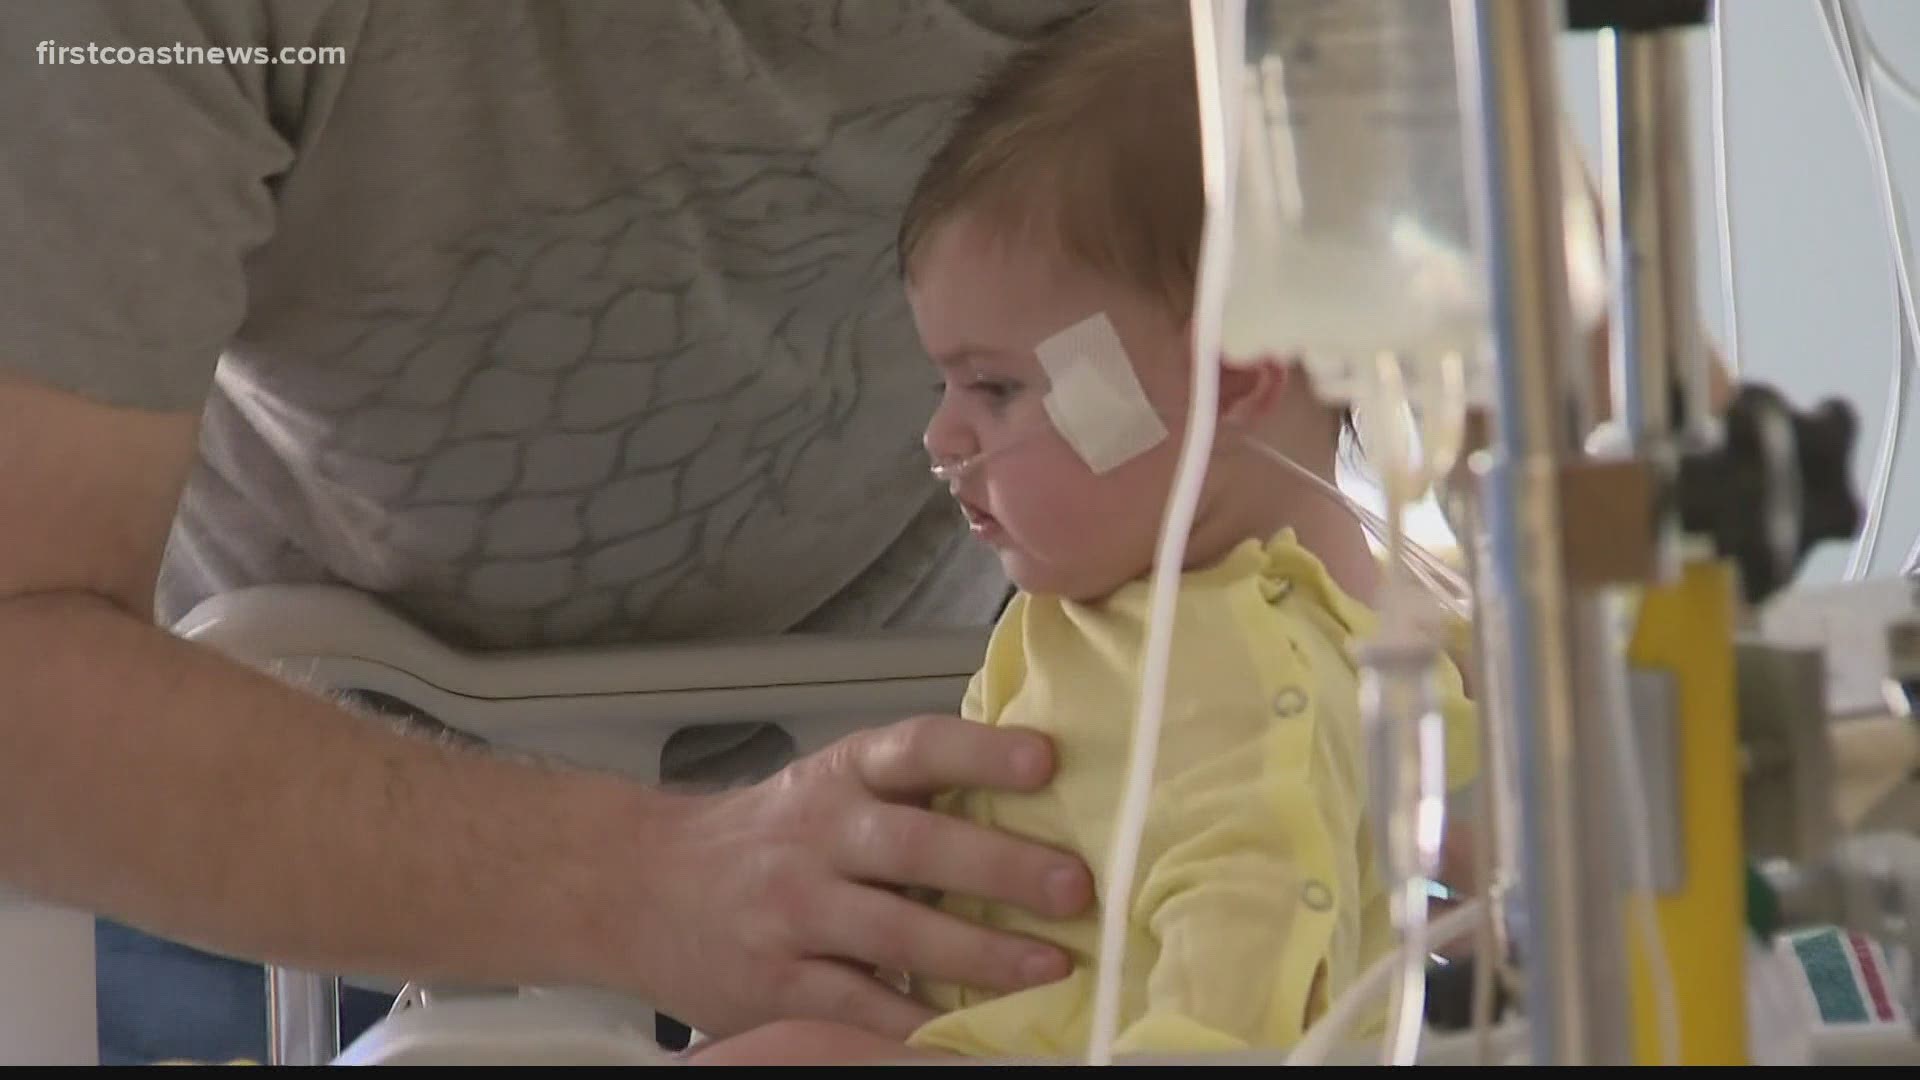 Cases of RSV in children rising, Jacksonville doctor says